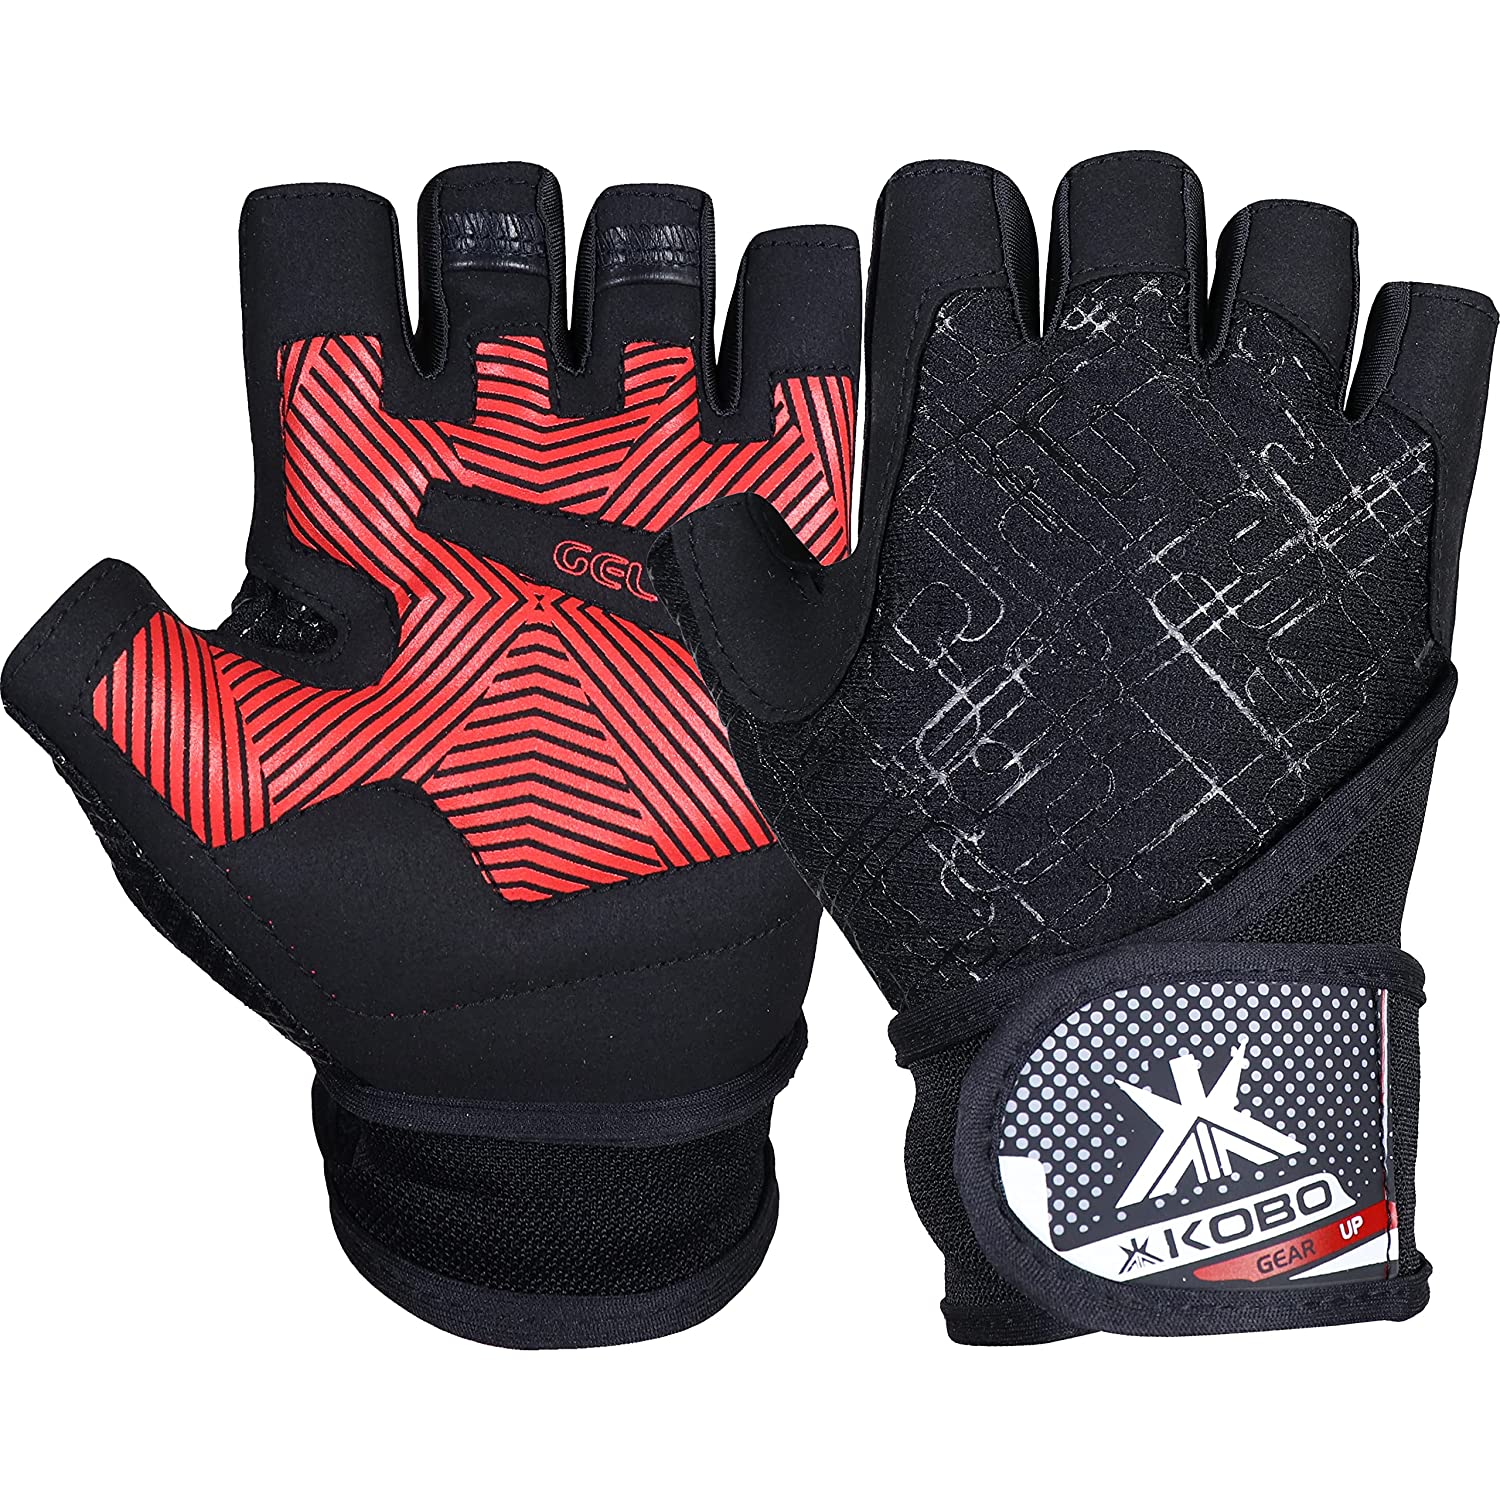 Kobo WTG-55 Gym Gloves with Wrist Support - KOBO SPORTS